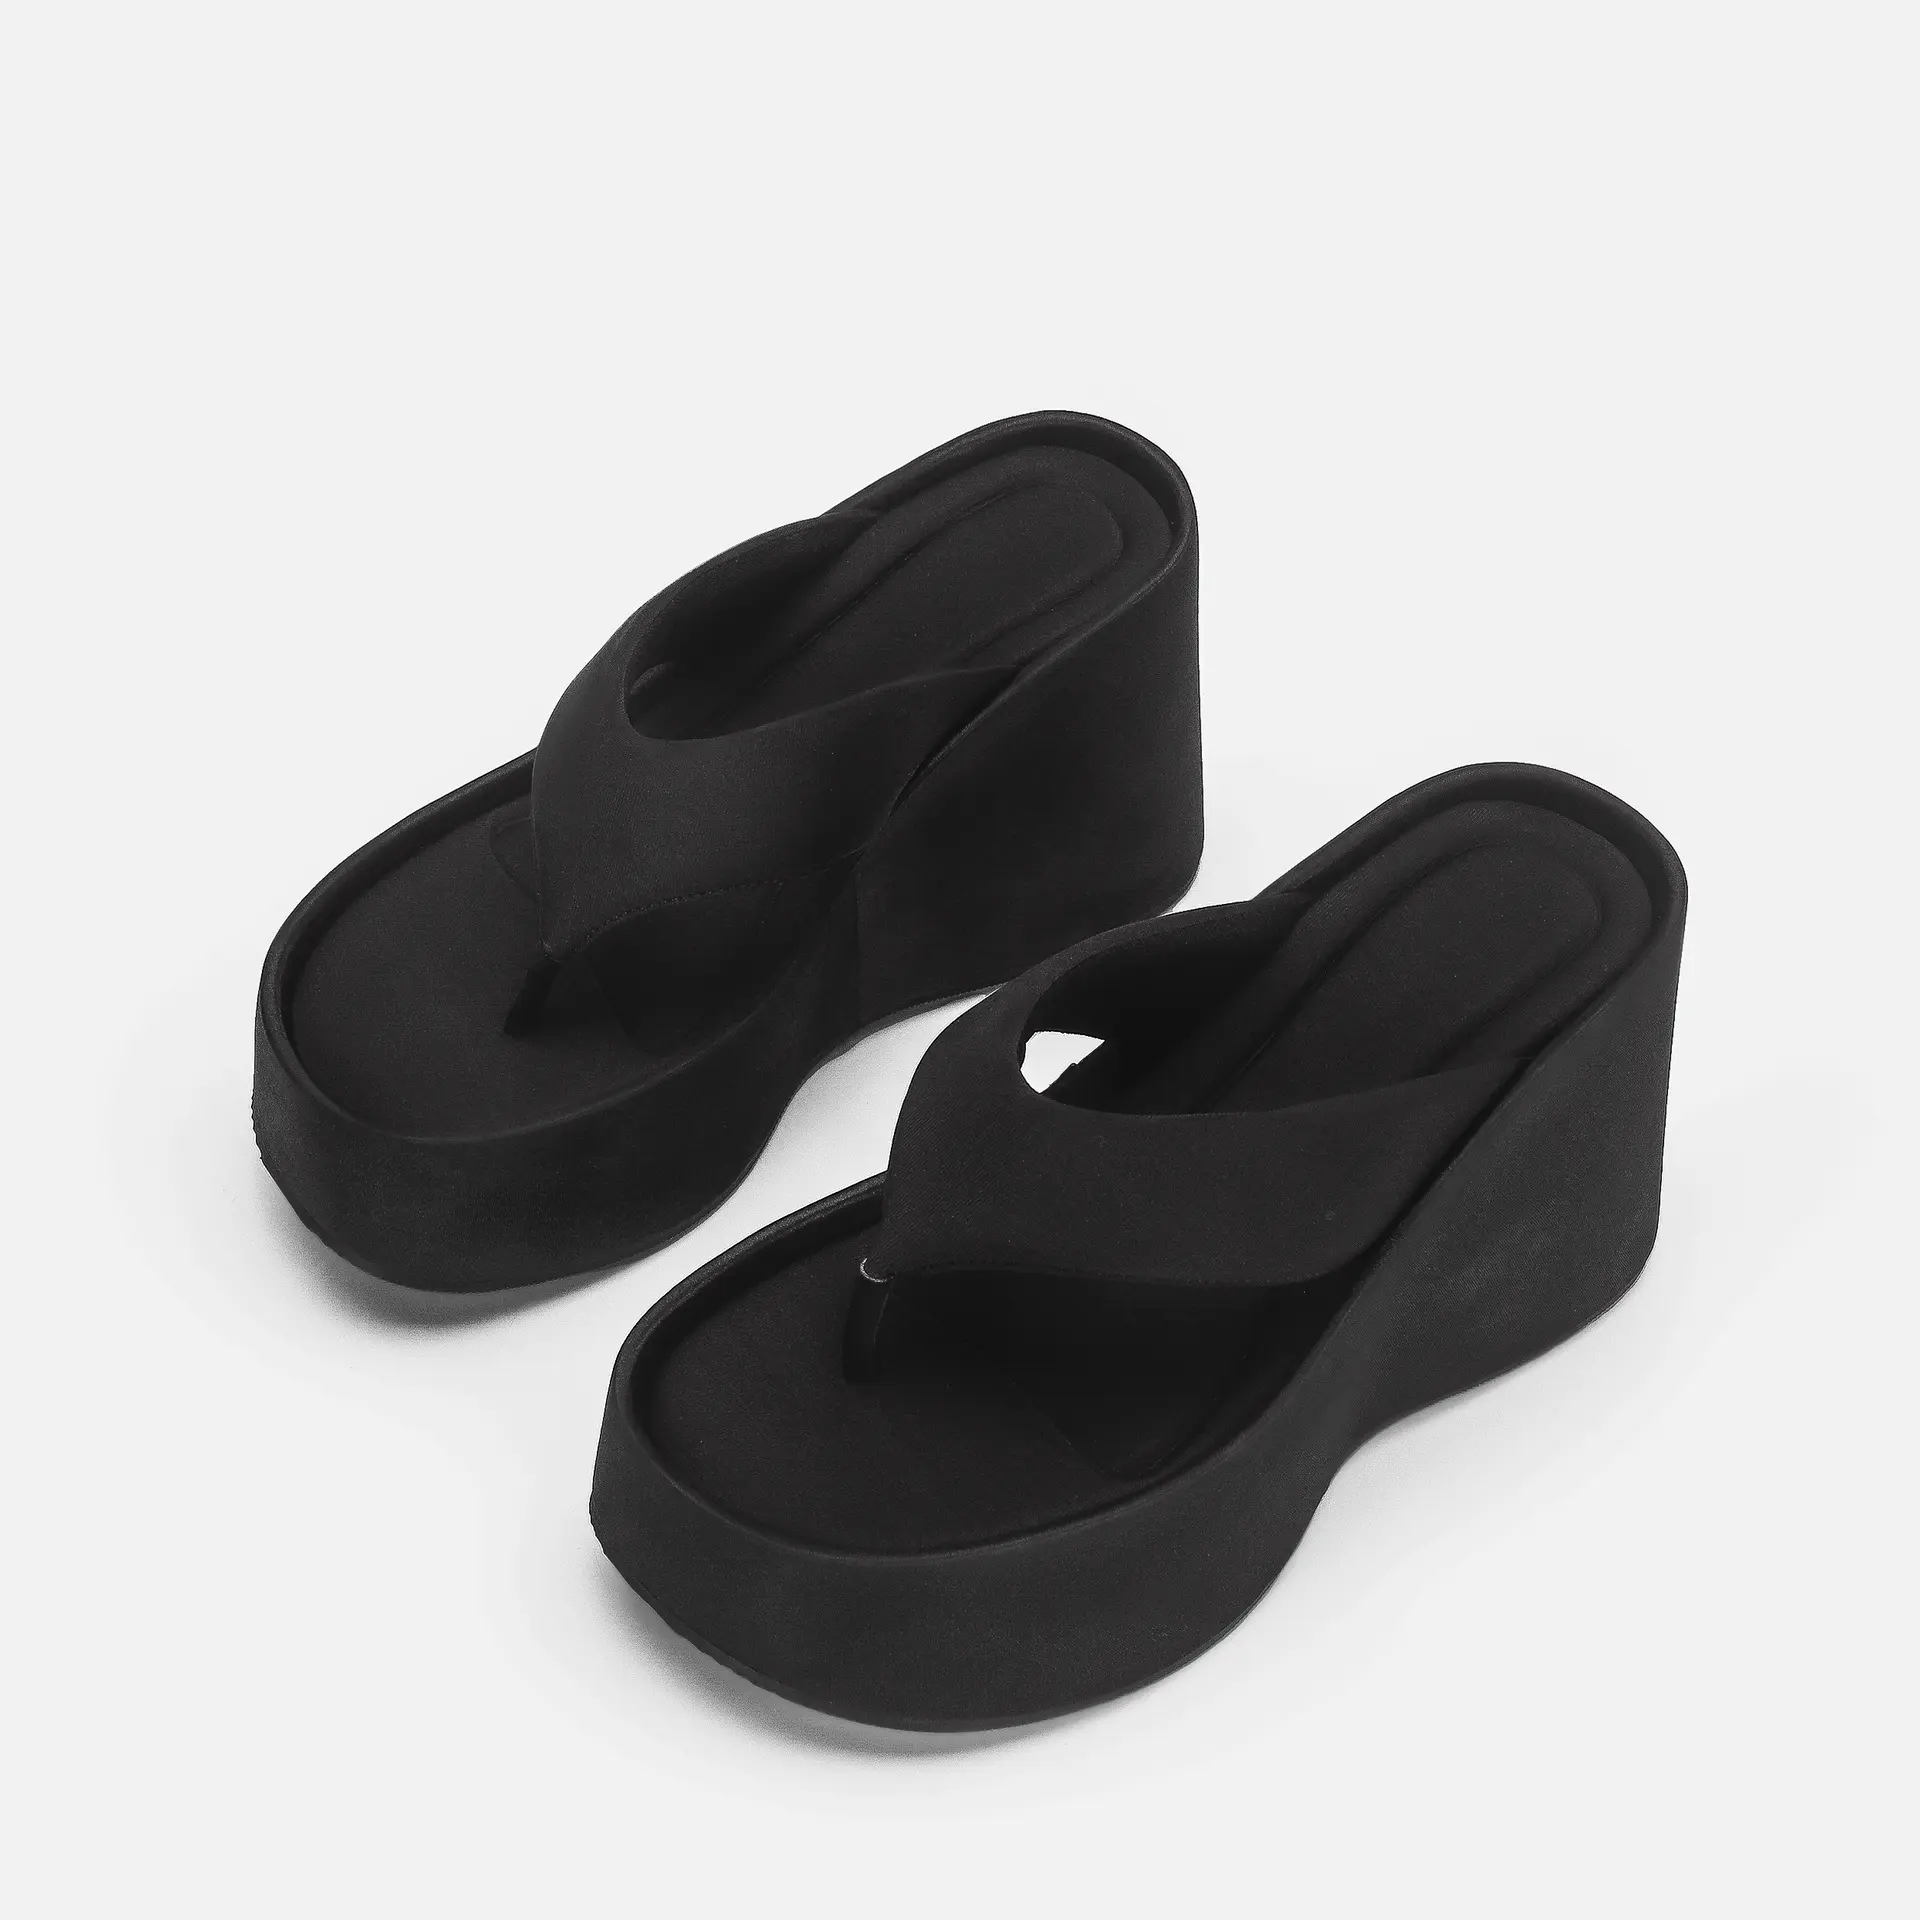 Xinzirain individuelle Damen-Summer-Flip-Flop-Sandalen hohe Plattform schwarz PU-Leder Keil offen dicke sohle Ferse große Auswahl